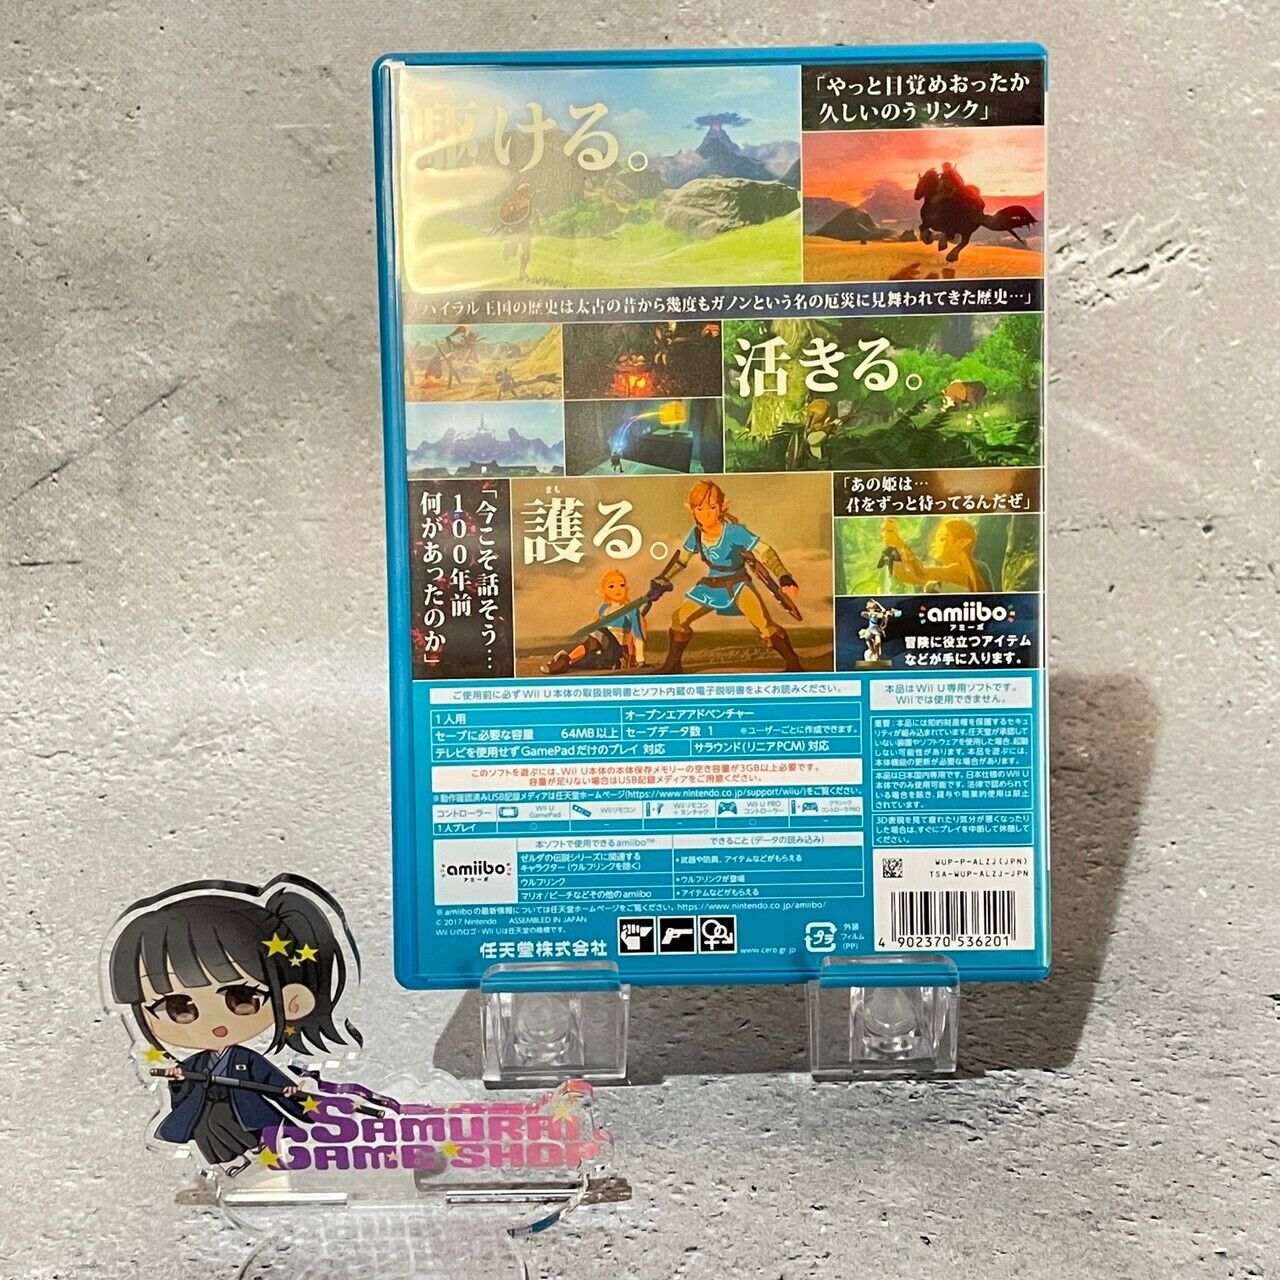 Wii Inazuma Eleven Go Strikers 2013 Nintendo Japanese Edition Working  tested OK